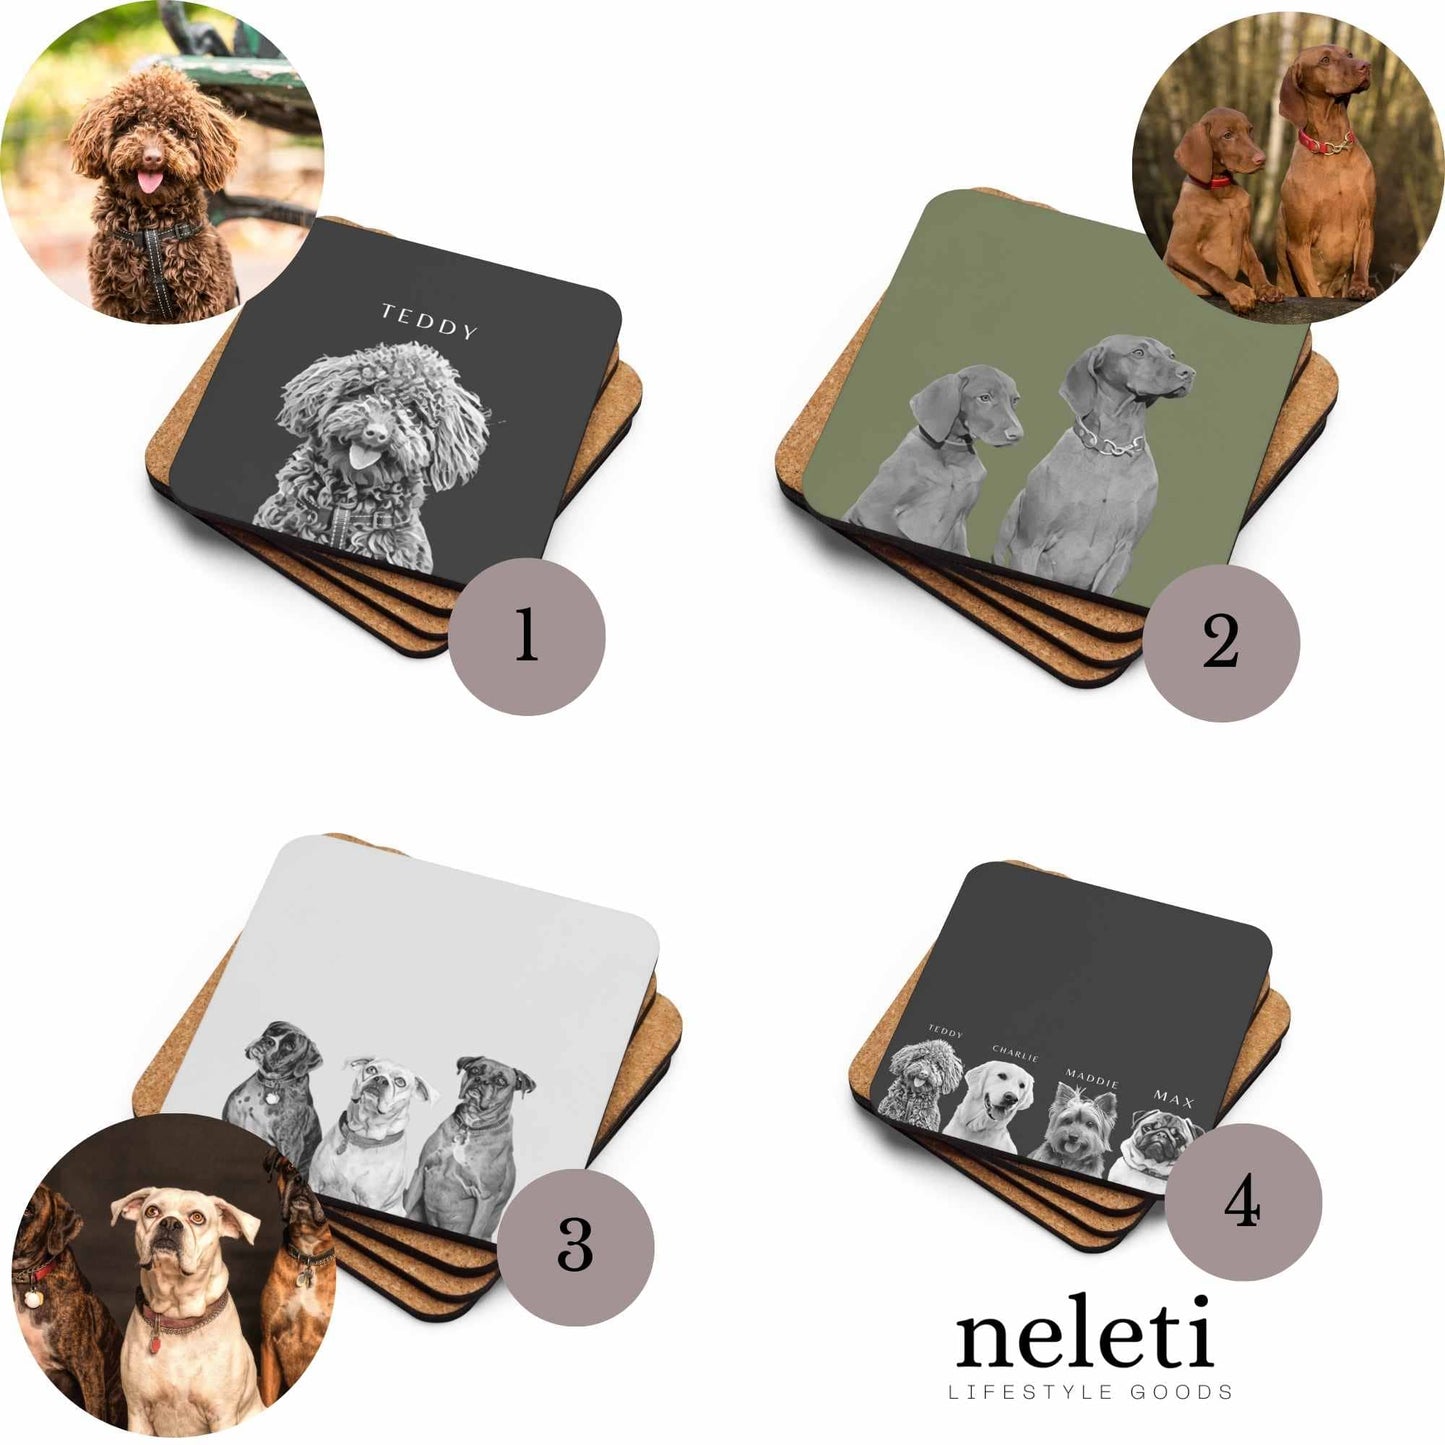 custom-coaster-with-pet-photo-neleti.com